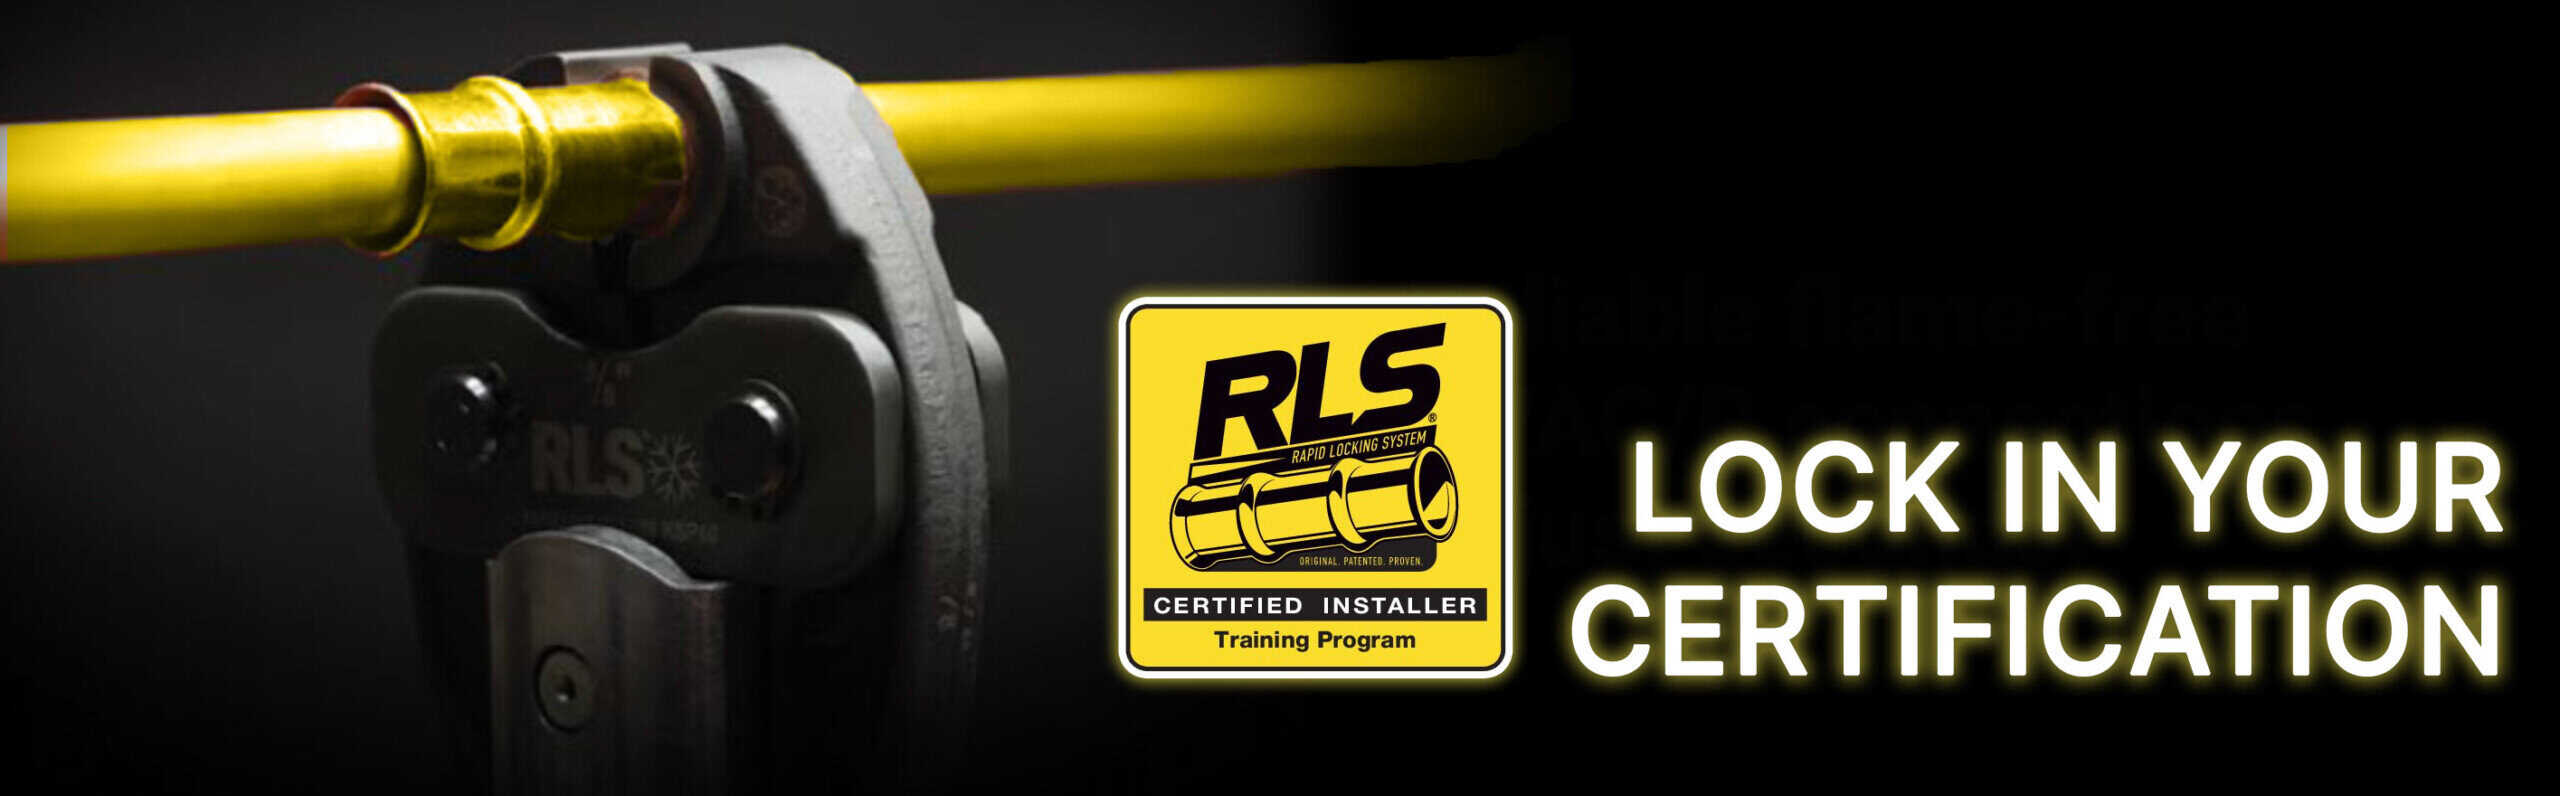 Lock in your RLS Certification